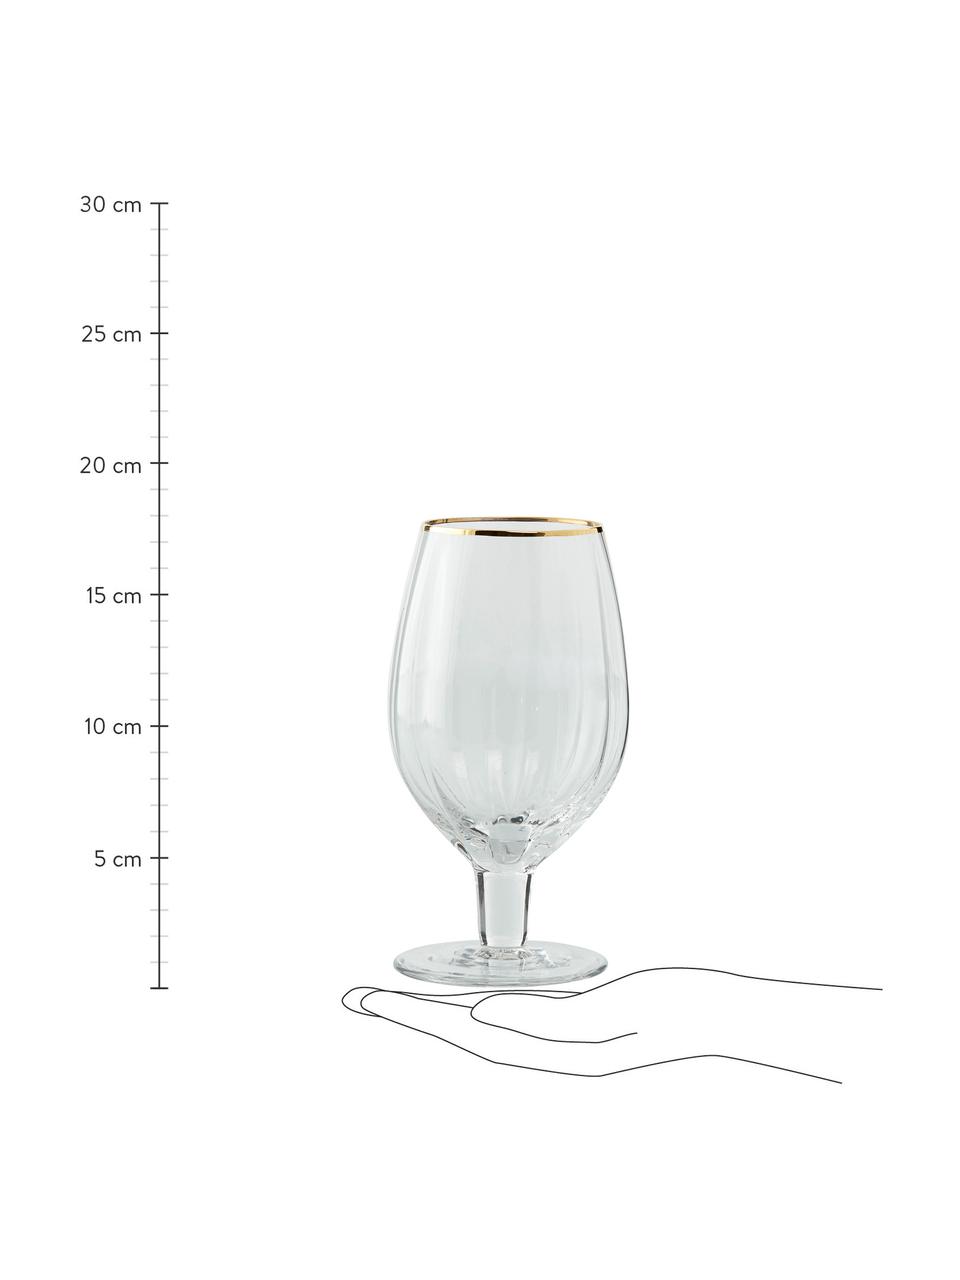 Biergläser Claudine, 4 Stück, Glas, Transparent, Goldfarben, Ø 10 x H 18 cm, 580 ml